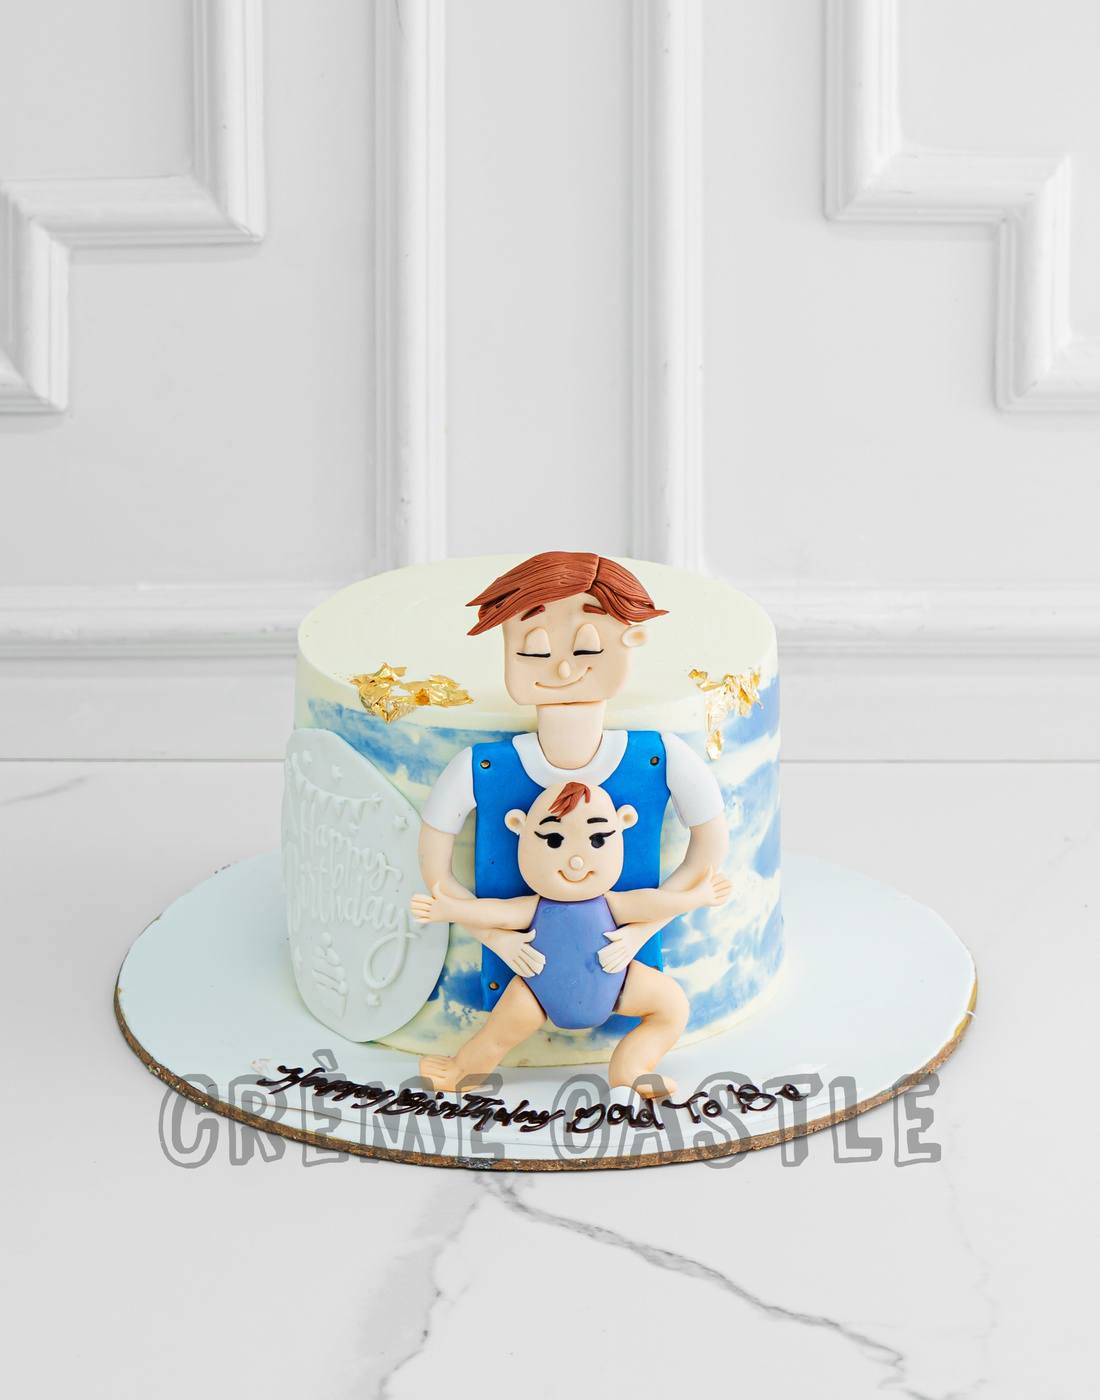 Father Daughter Birthday Cake | Yummy cake